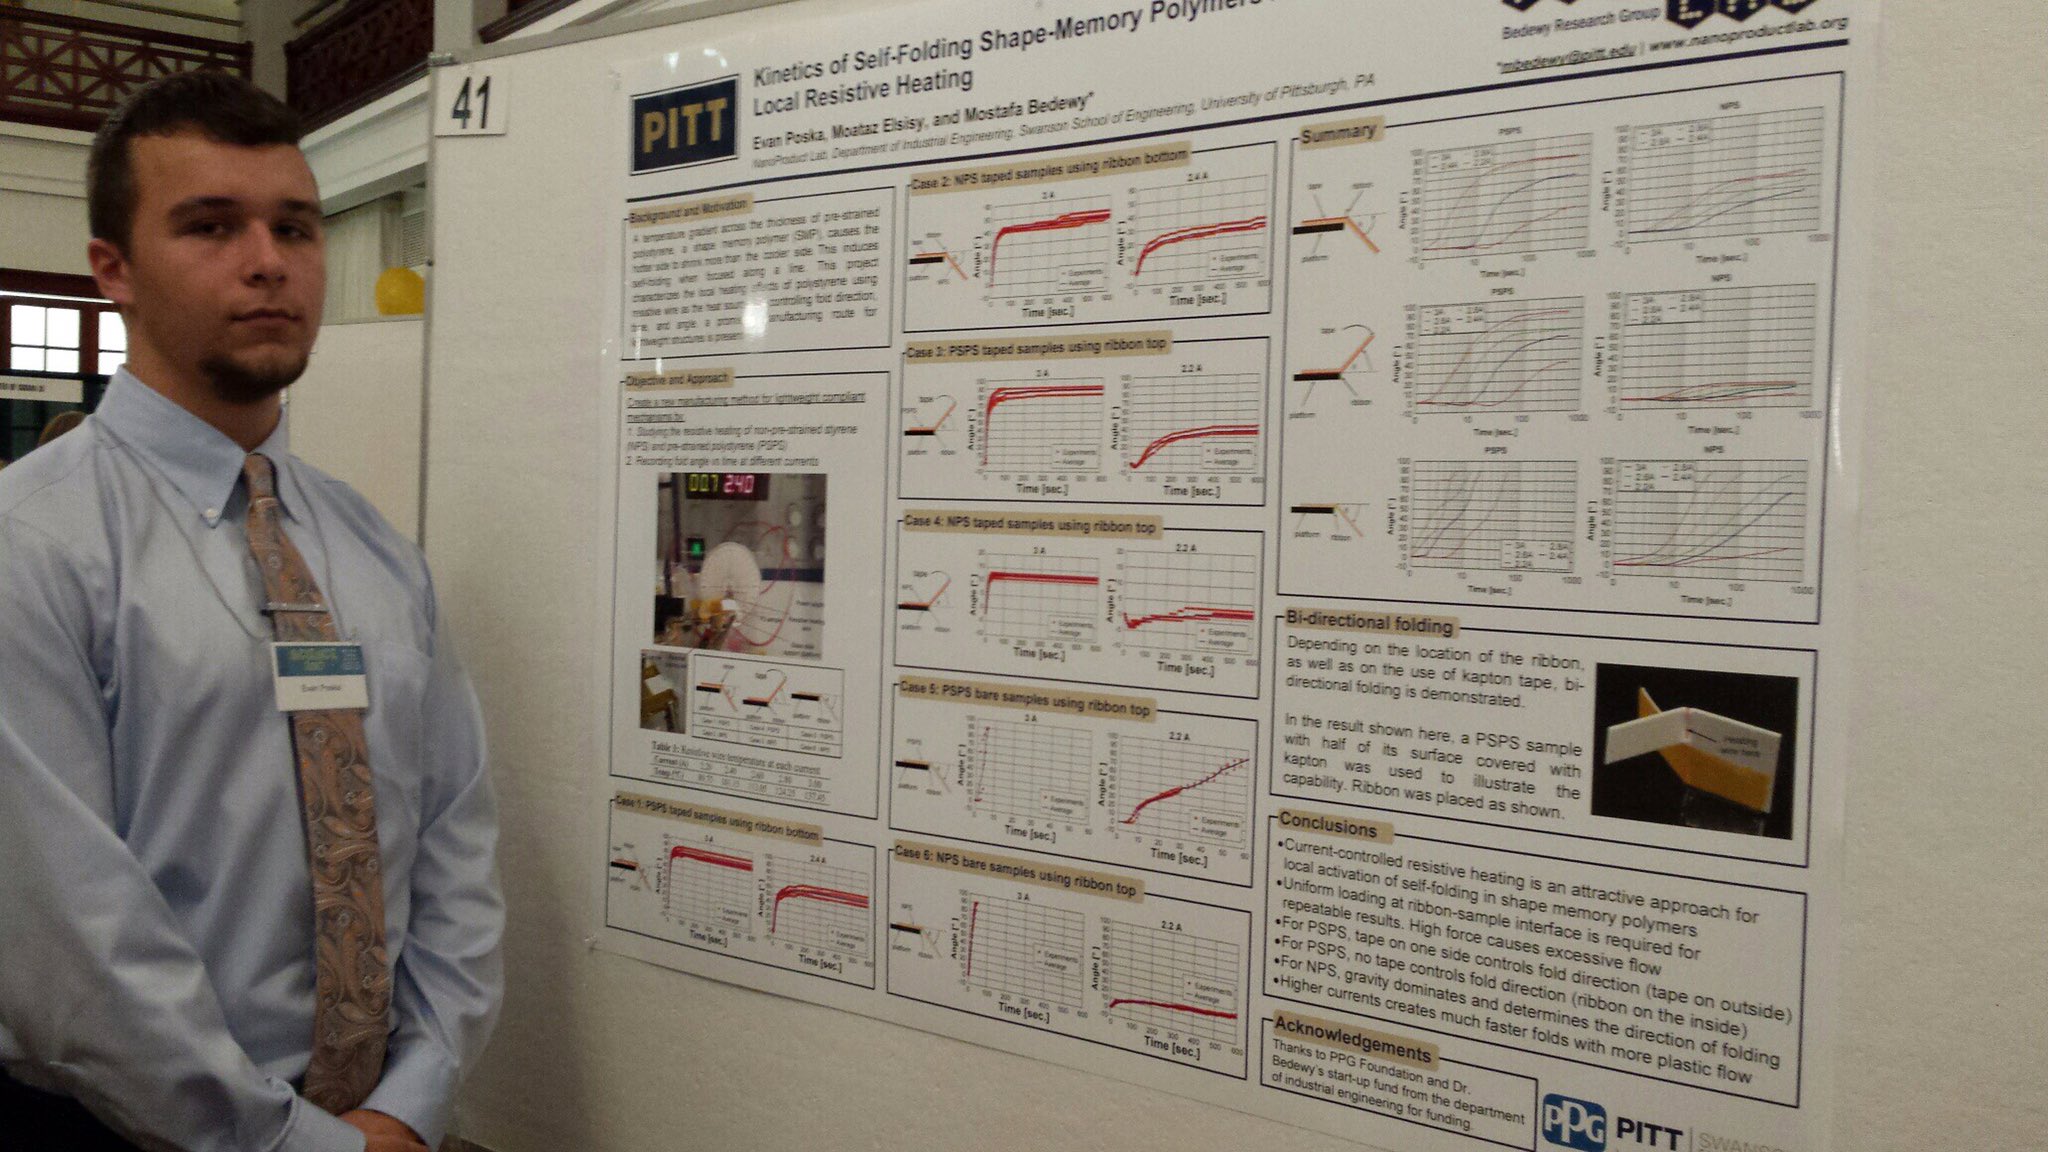 Evan Poska presents a poster on the self-folding shape memory polymer